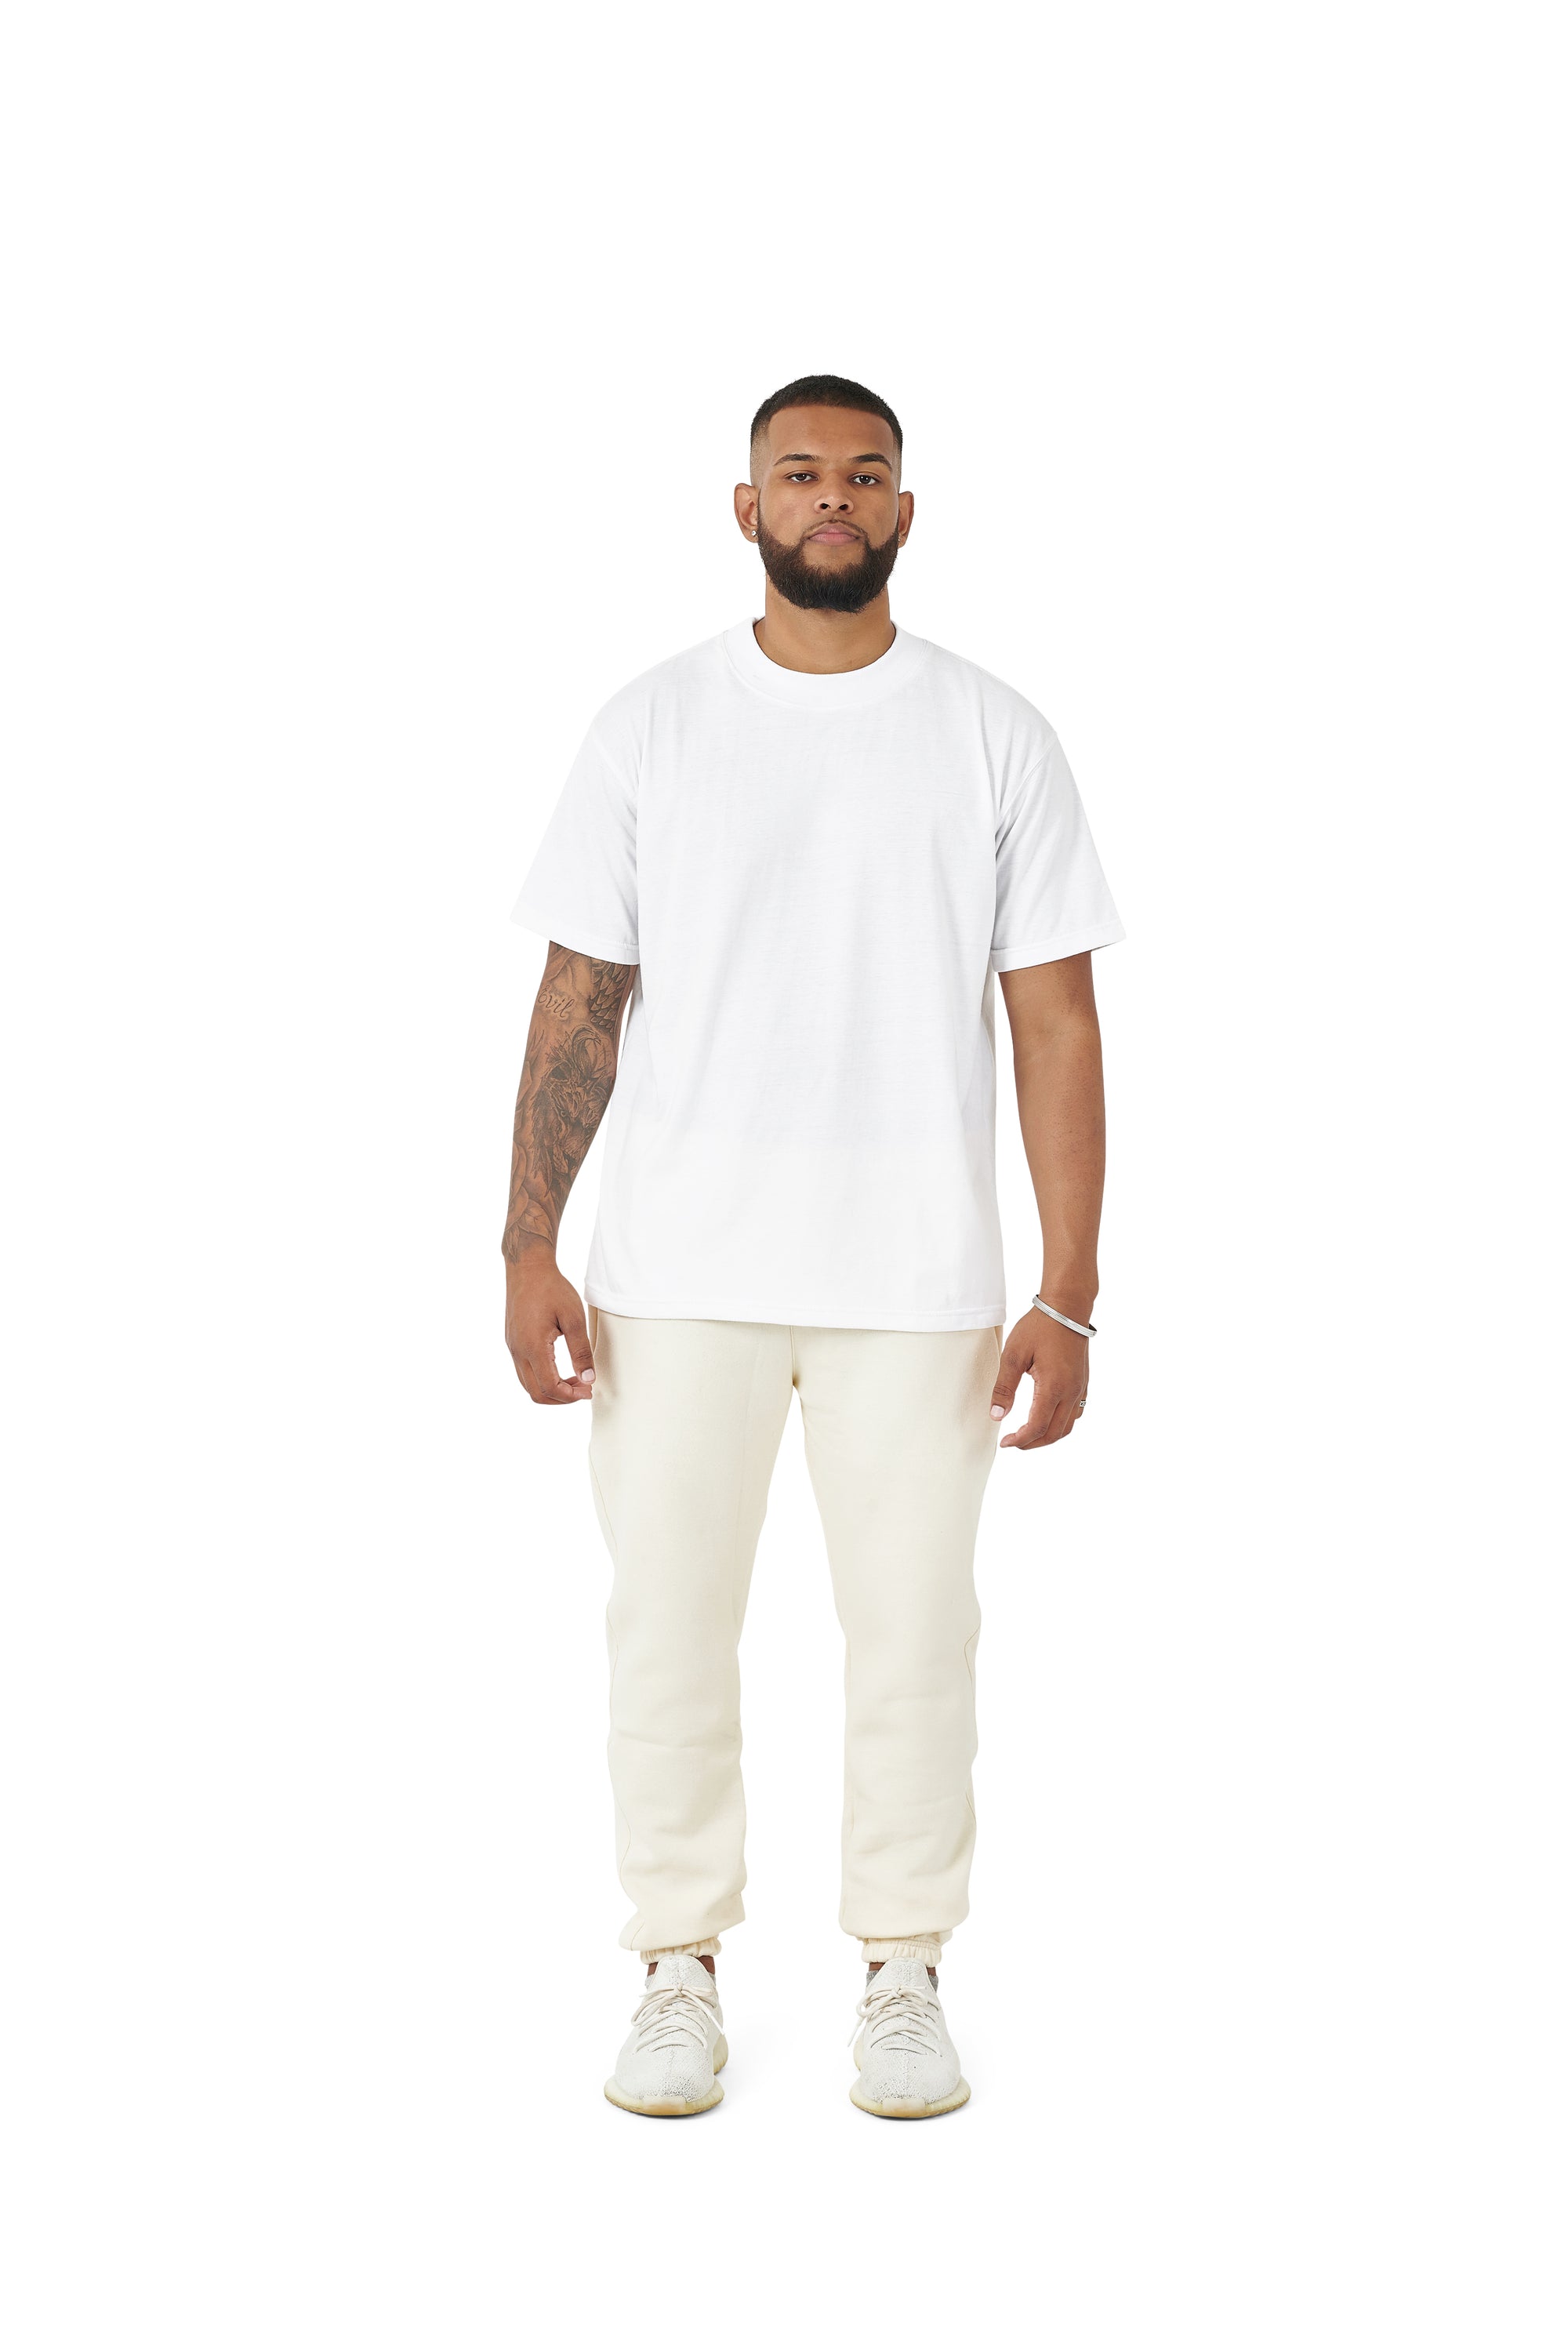 Wholesale Plain White Oversized T-shirt and Plain Oversized Cream Jogging Bottoms